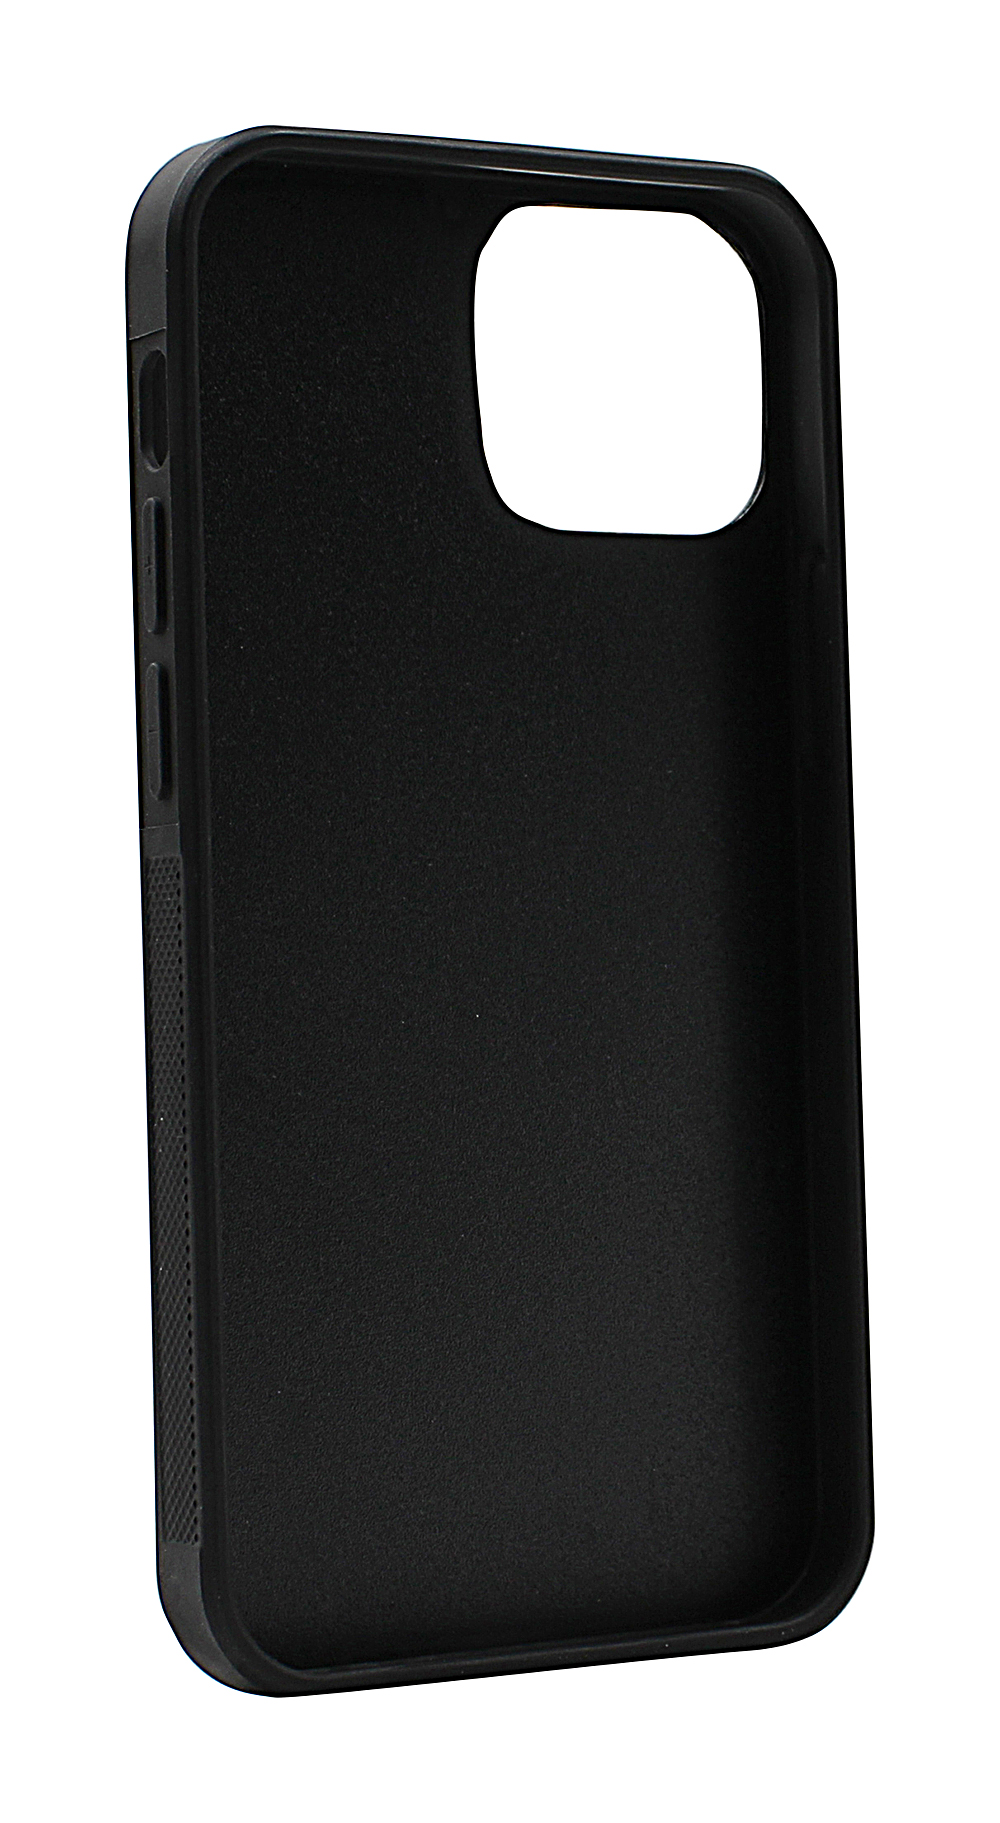 Skimblocker XL Magnet Wallet iPhone 13 Mini (5.4)